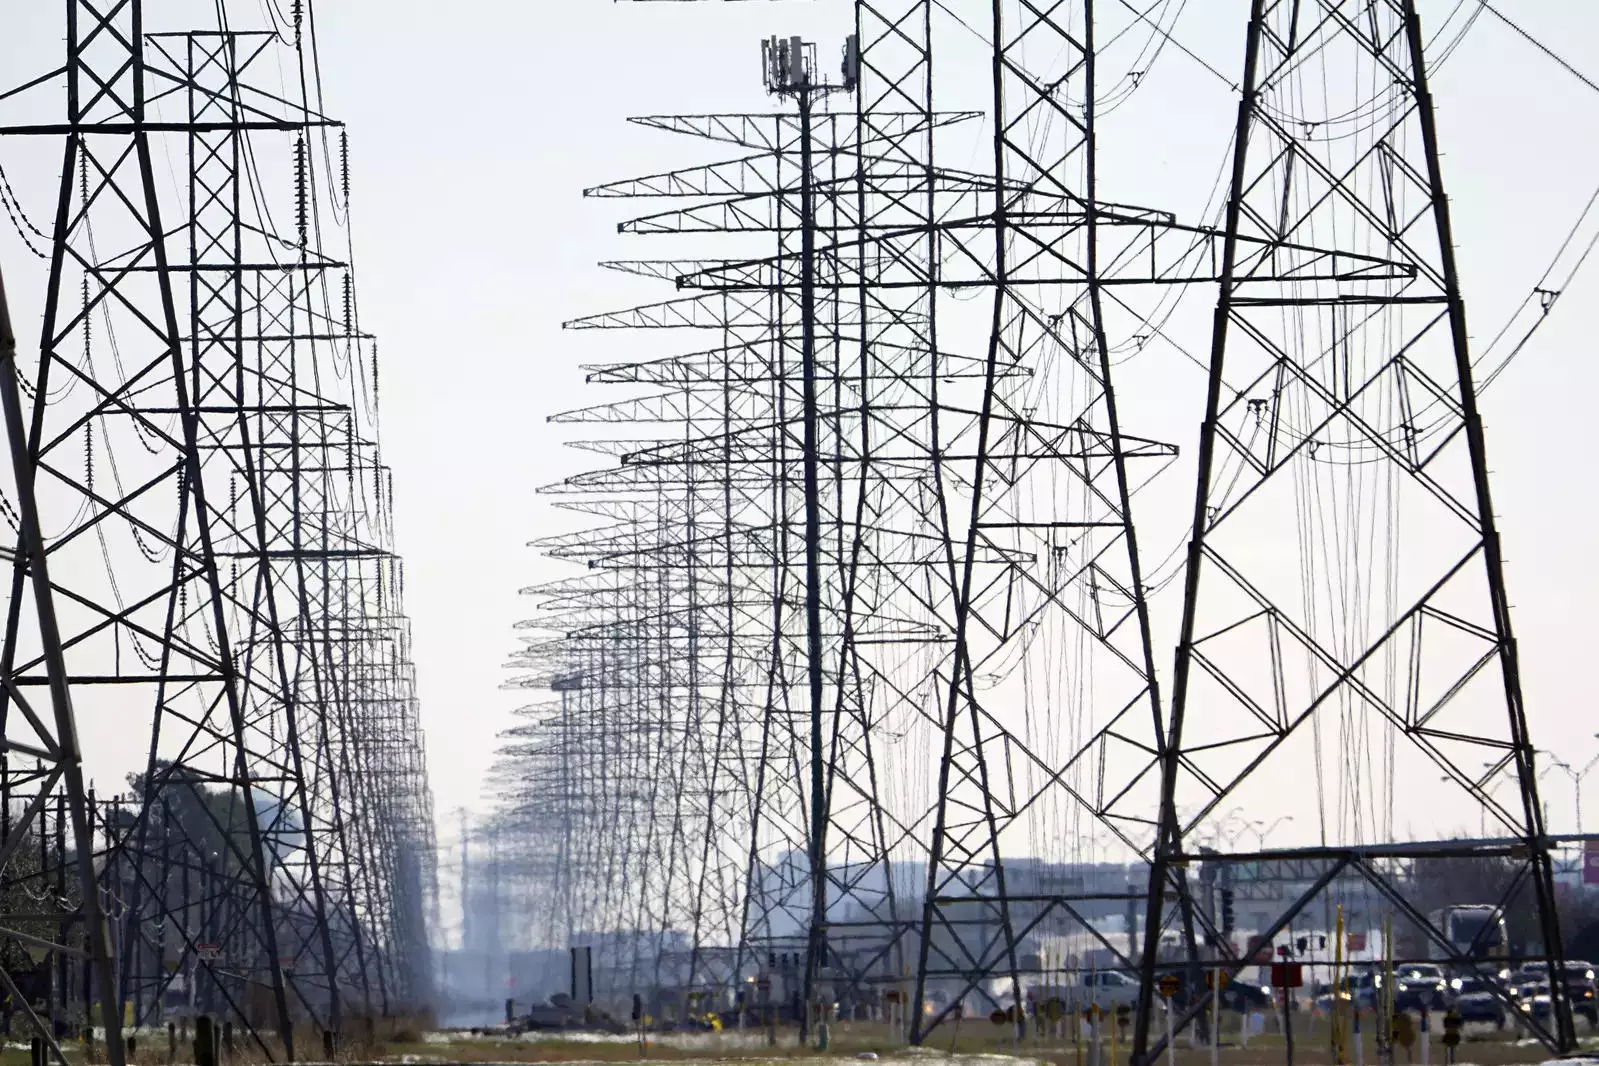 At 6,499 MW, Delhi Sees Highest Power Demand This Summer